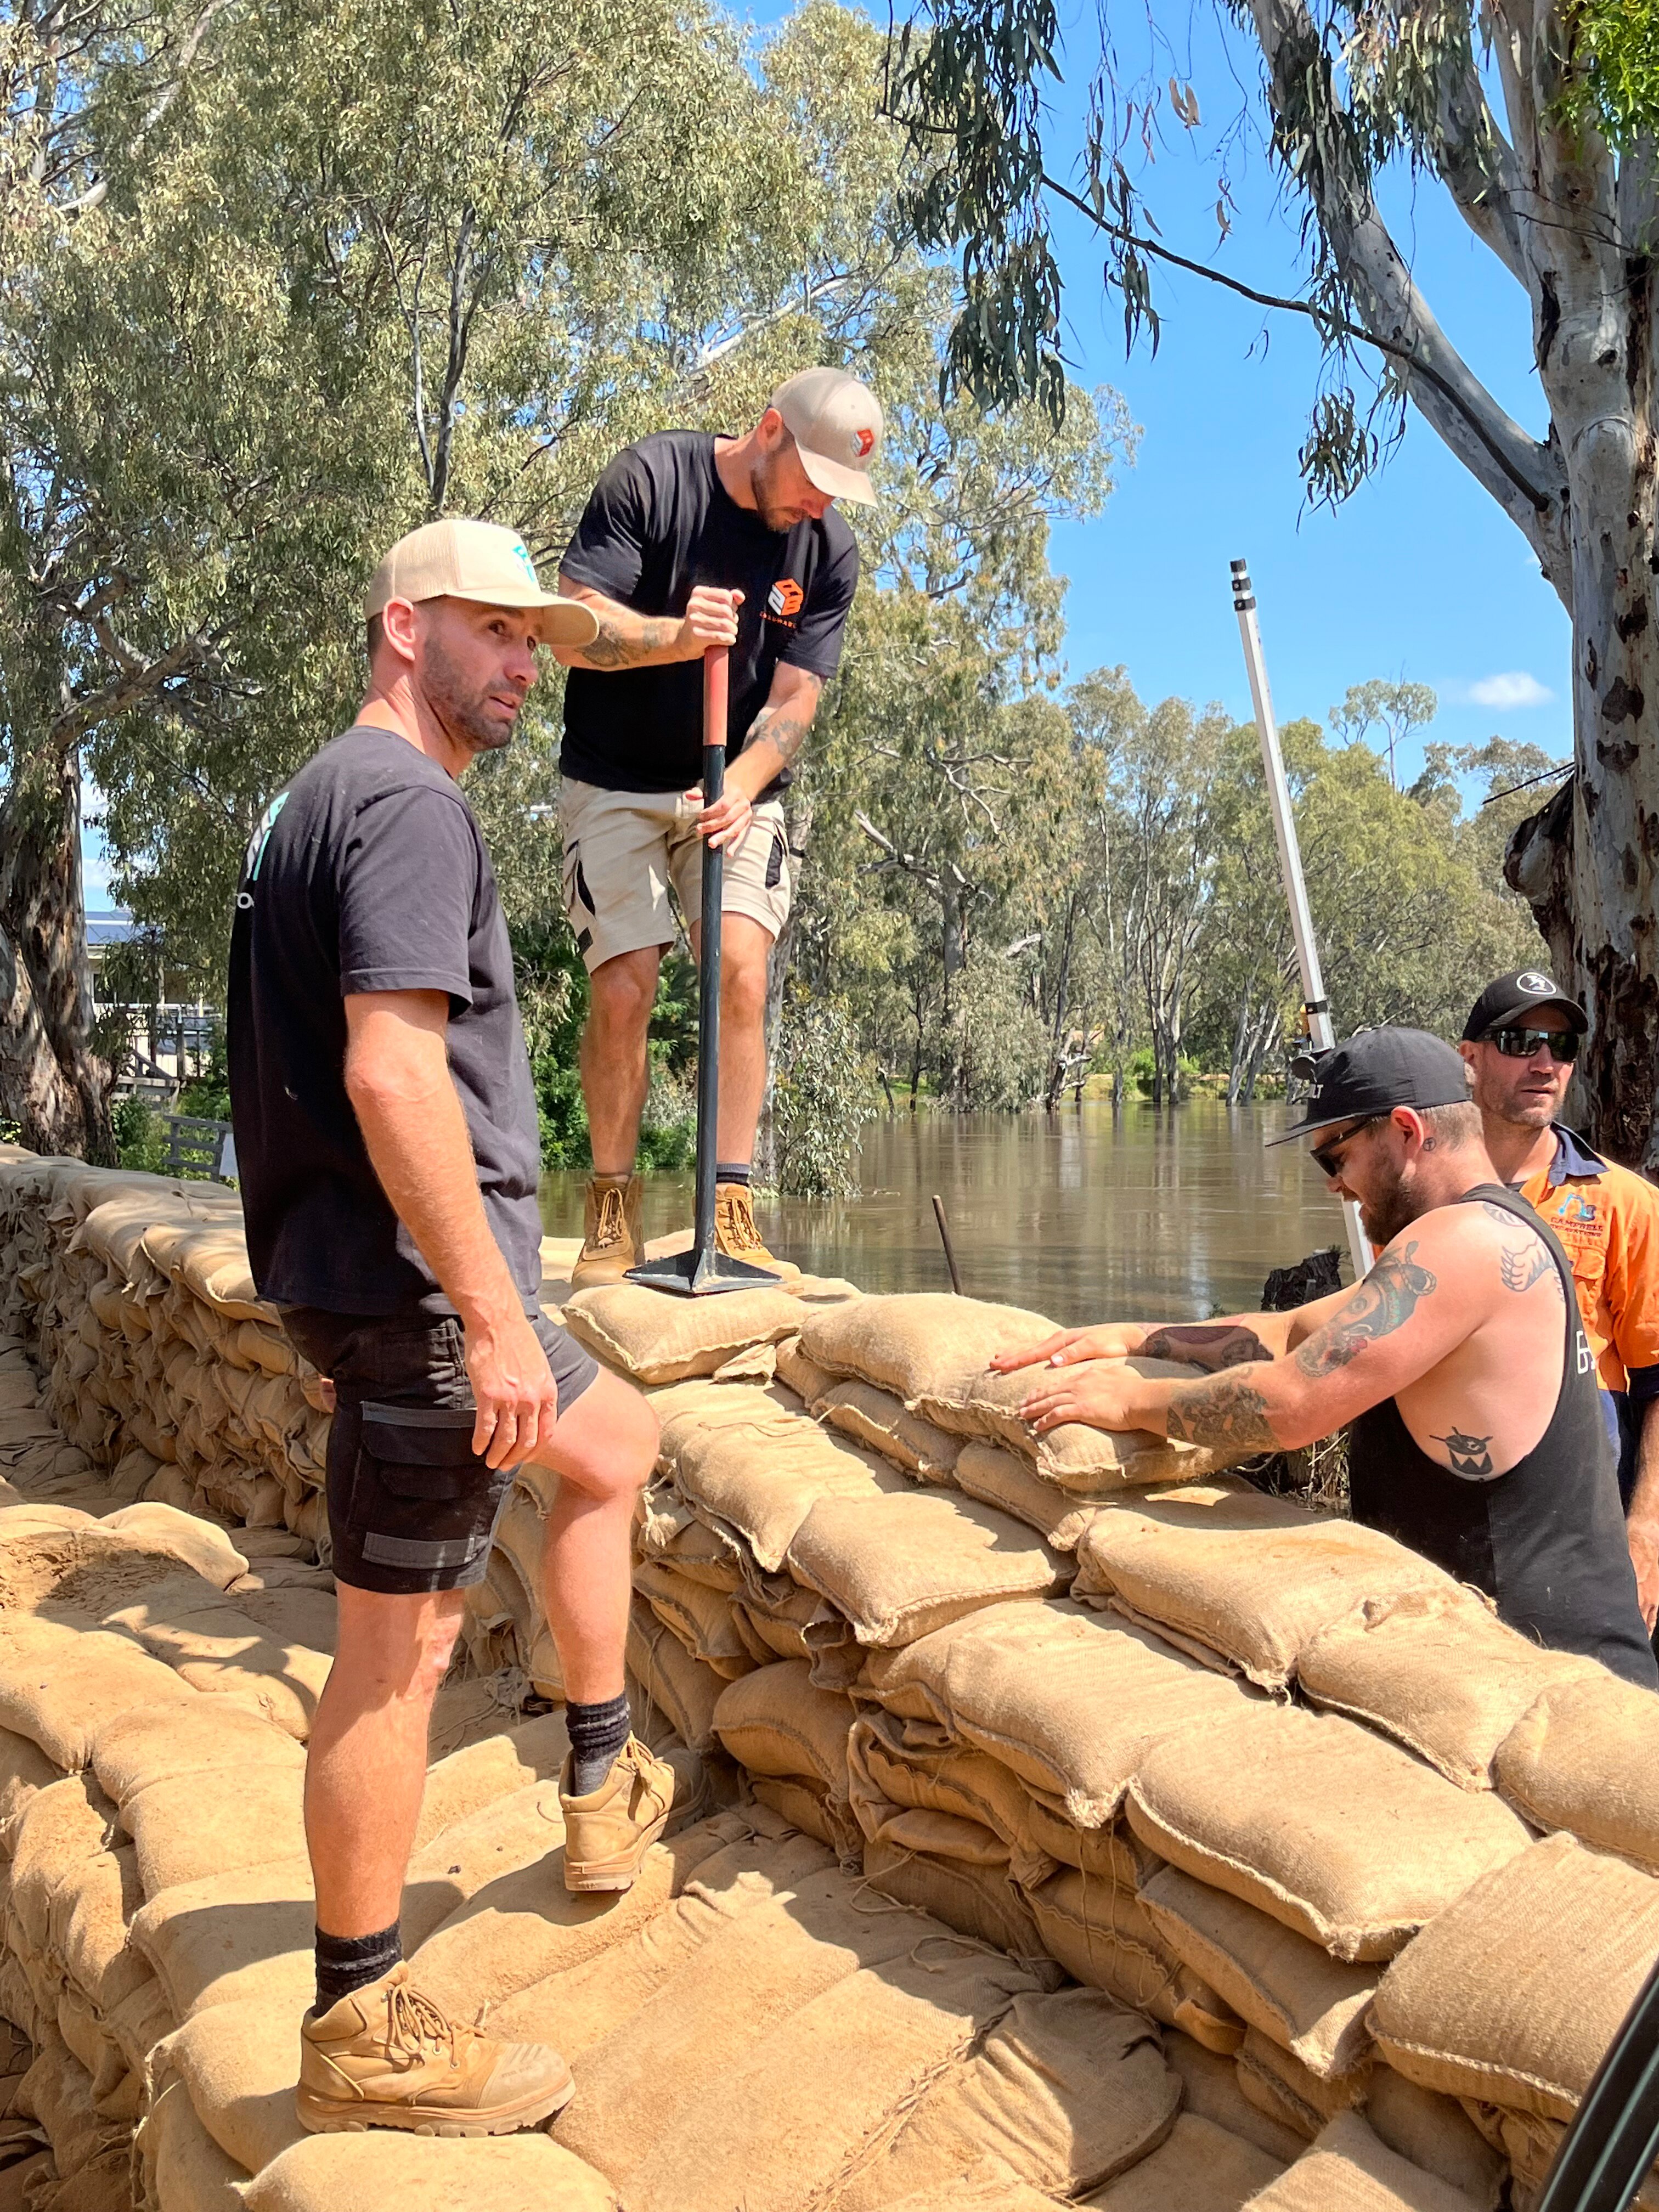 Four men building a sandbag wall near a river.